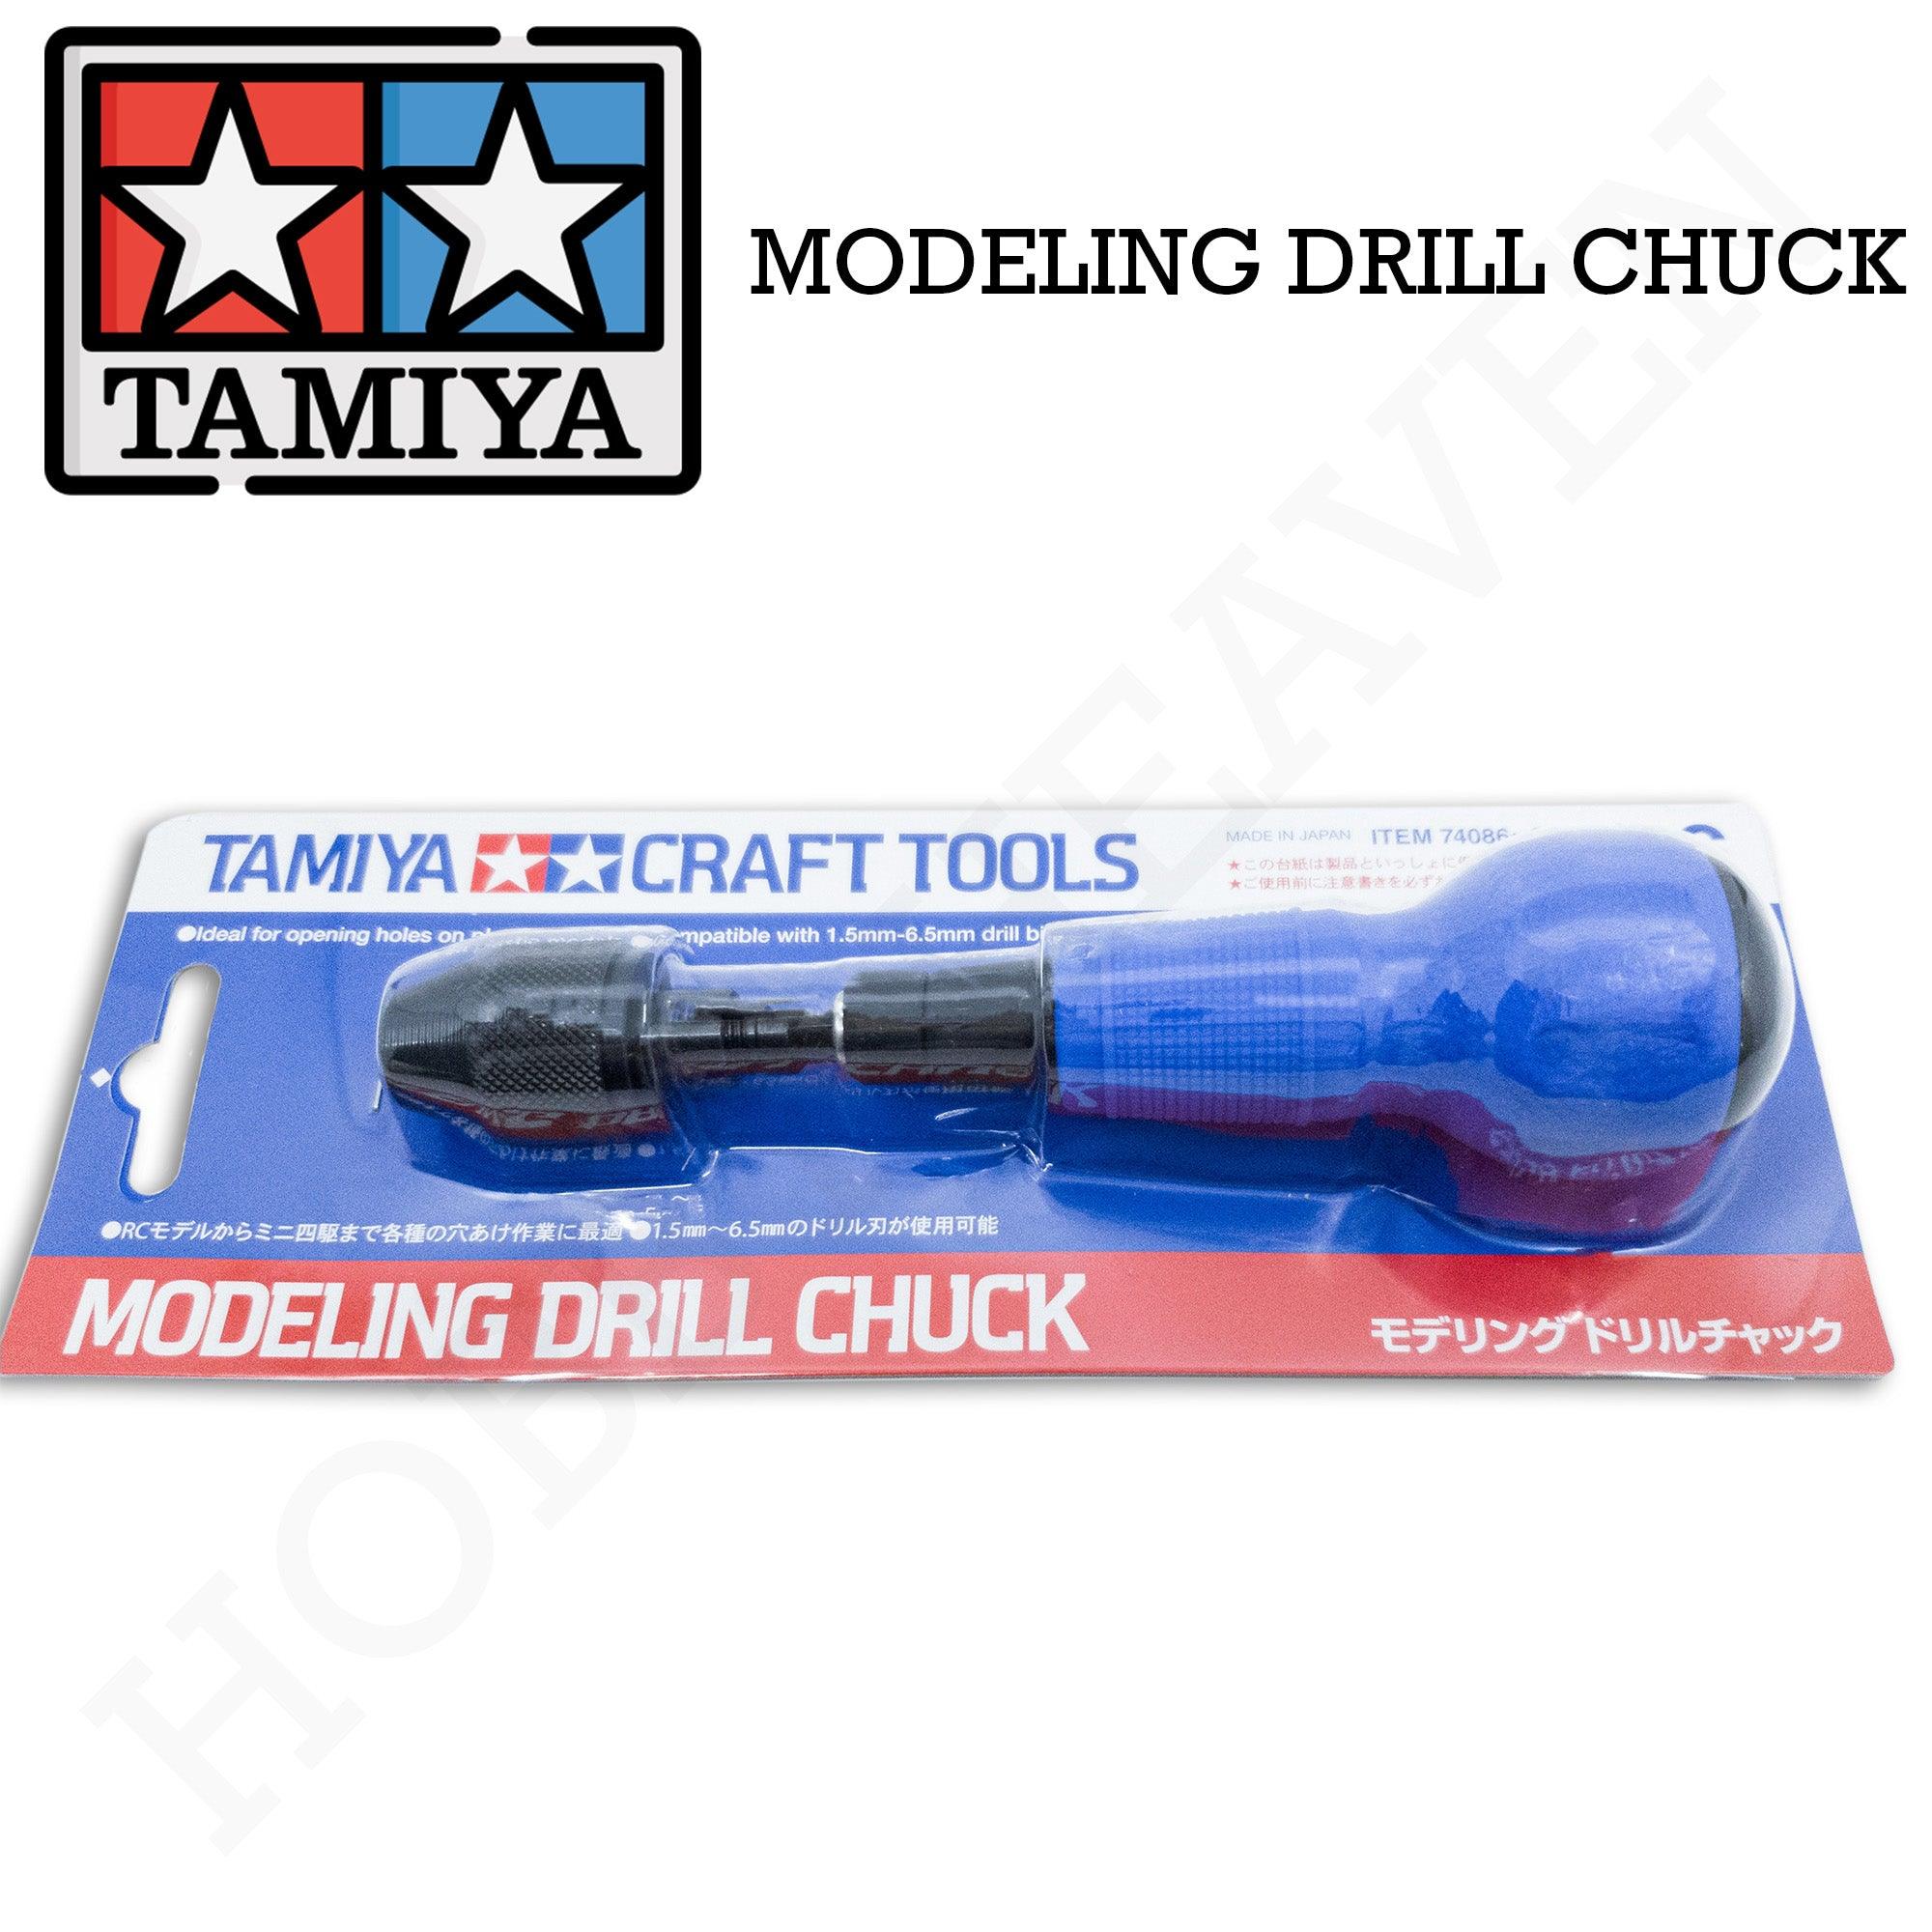 Tamiya Modeling Drill Chuck 74086